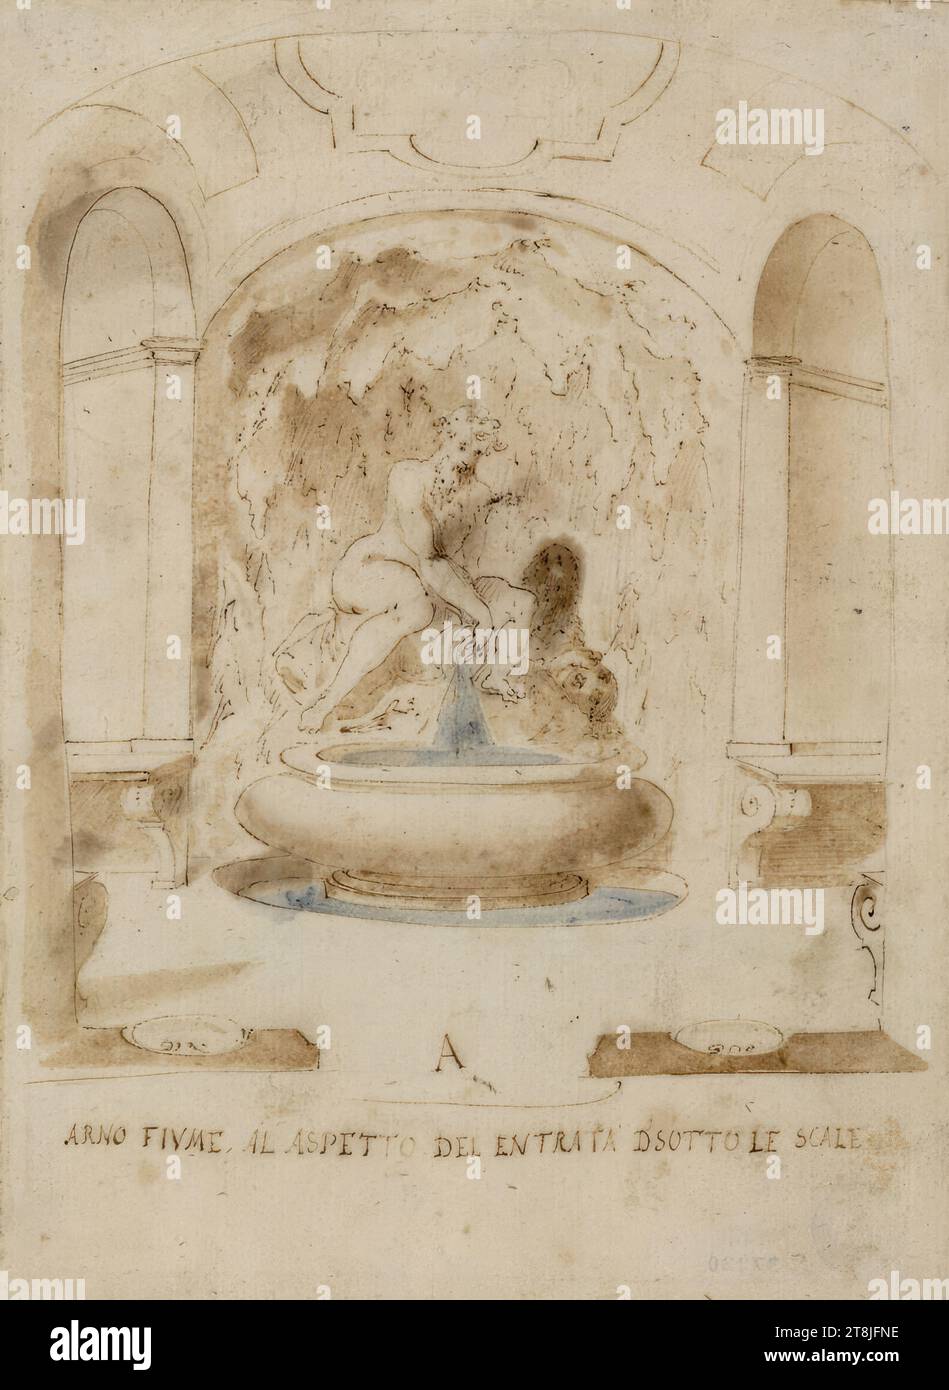 Pratolino, Piano terreno, Giovanni Guerra, Modène vers 1540/44 - 1618 Rome, vers 1598, dessin, plume, bister, lavage, drap : 22,6 cm x 16,5 cm Banque D'Images